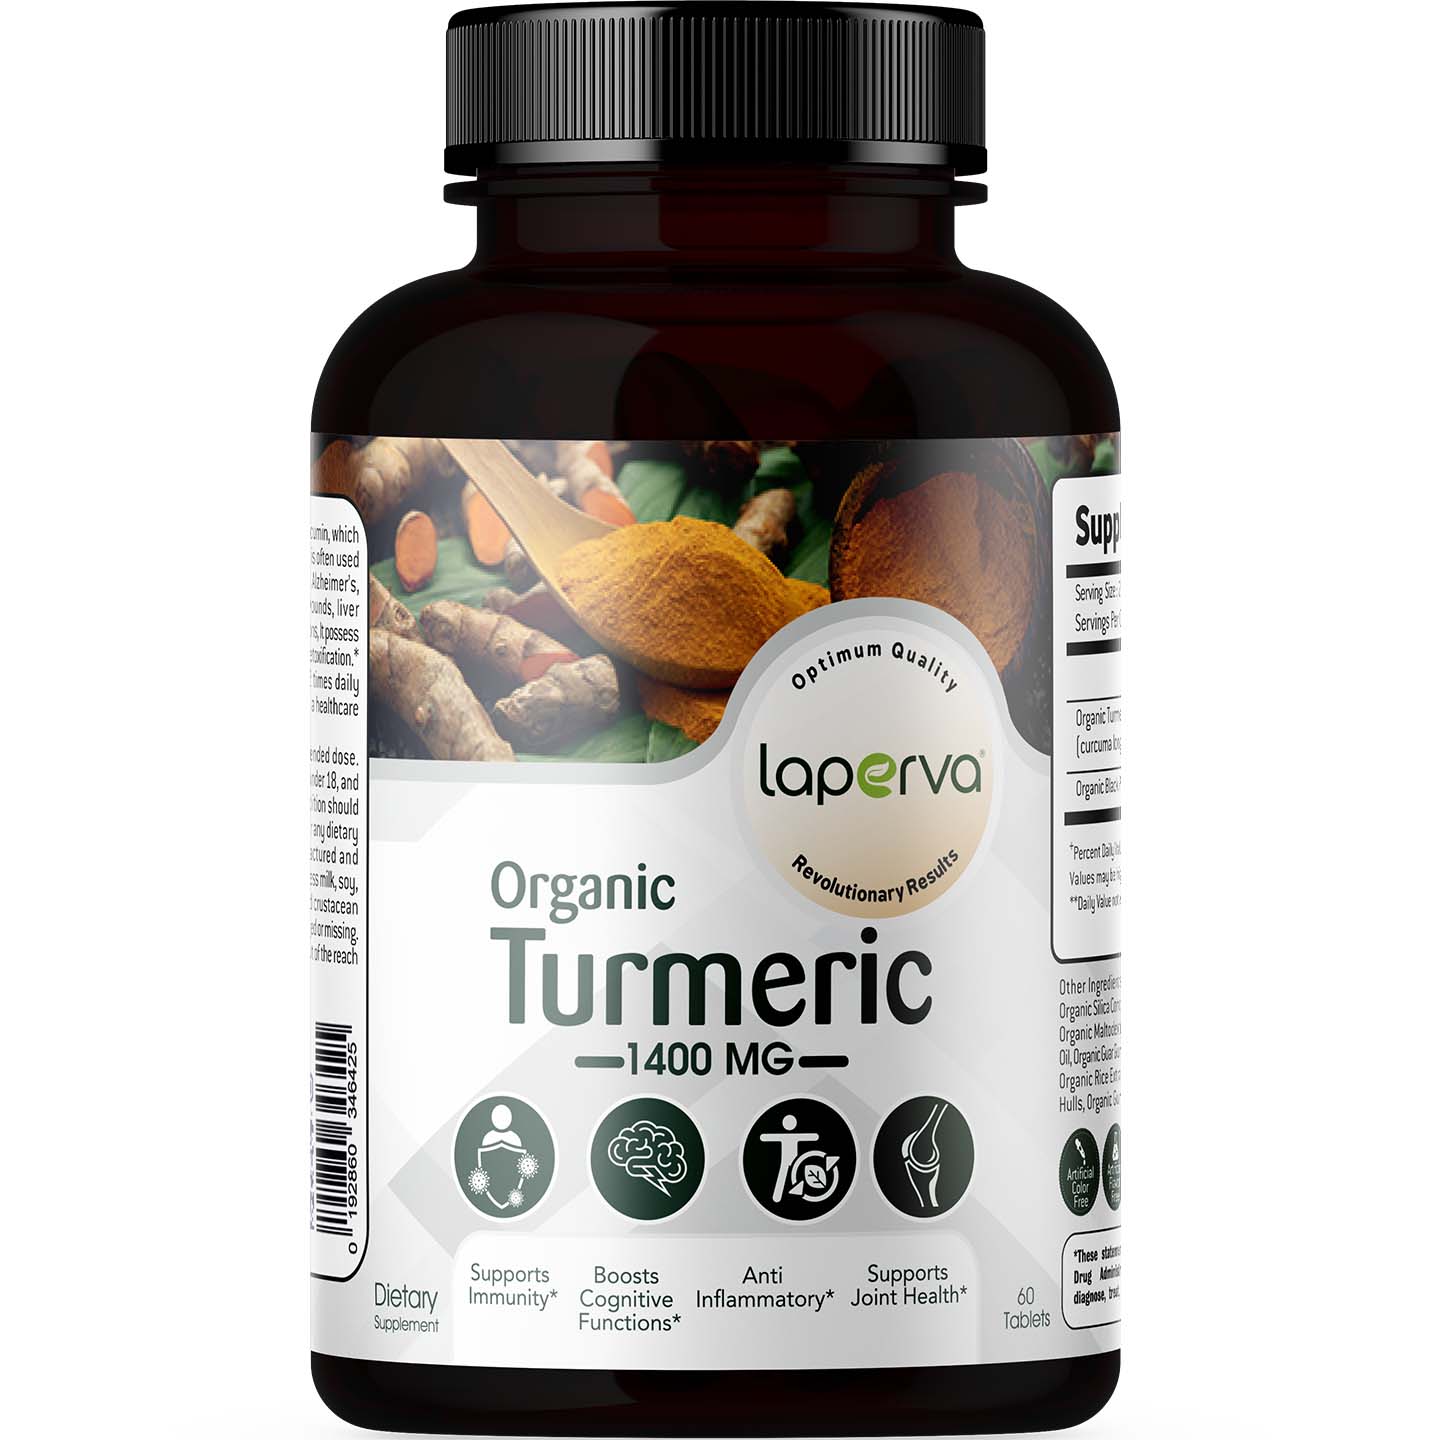 Laperva Organic Turmeric, 1400 mg, 60 Tablets